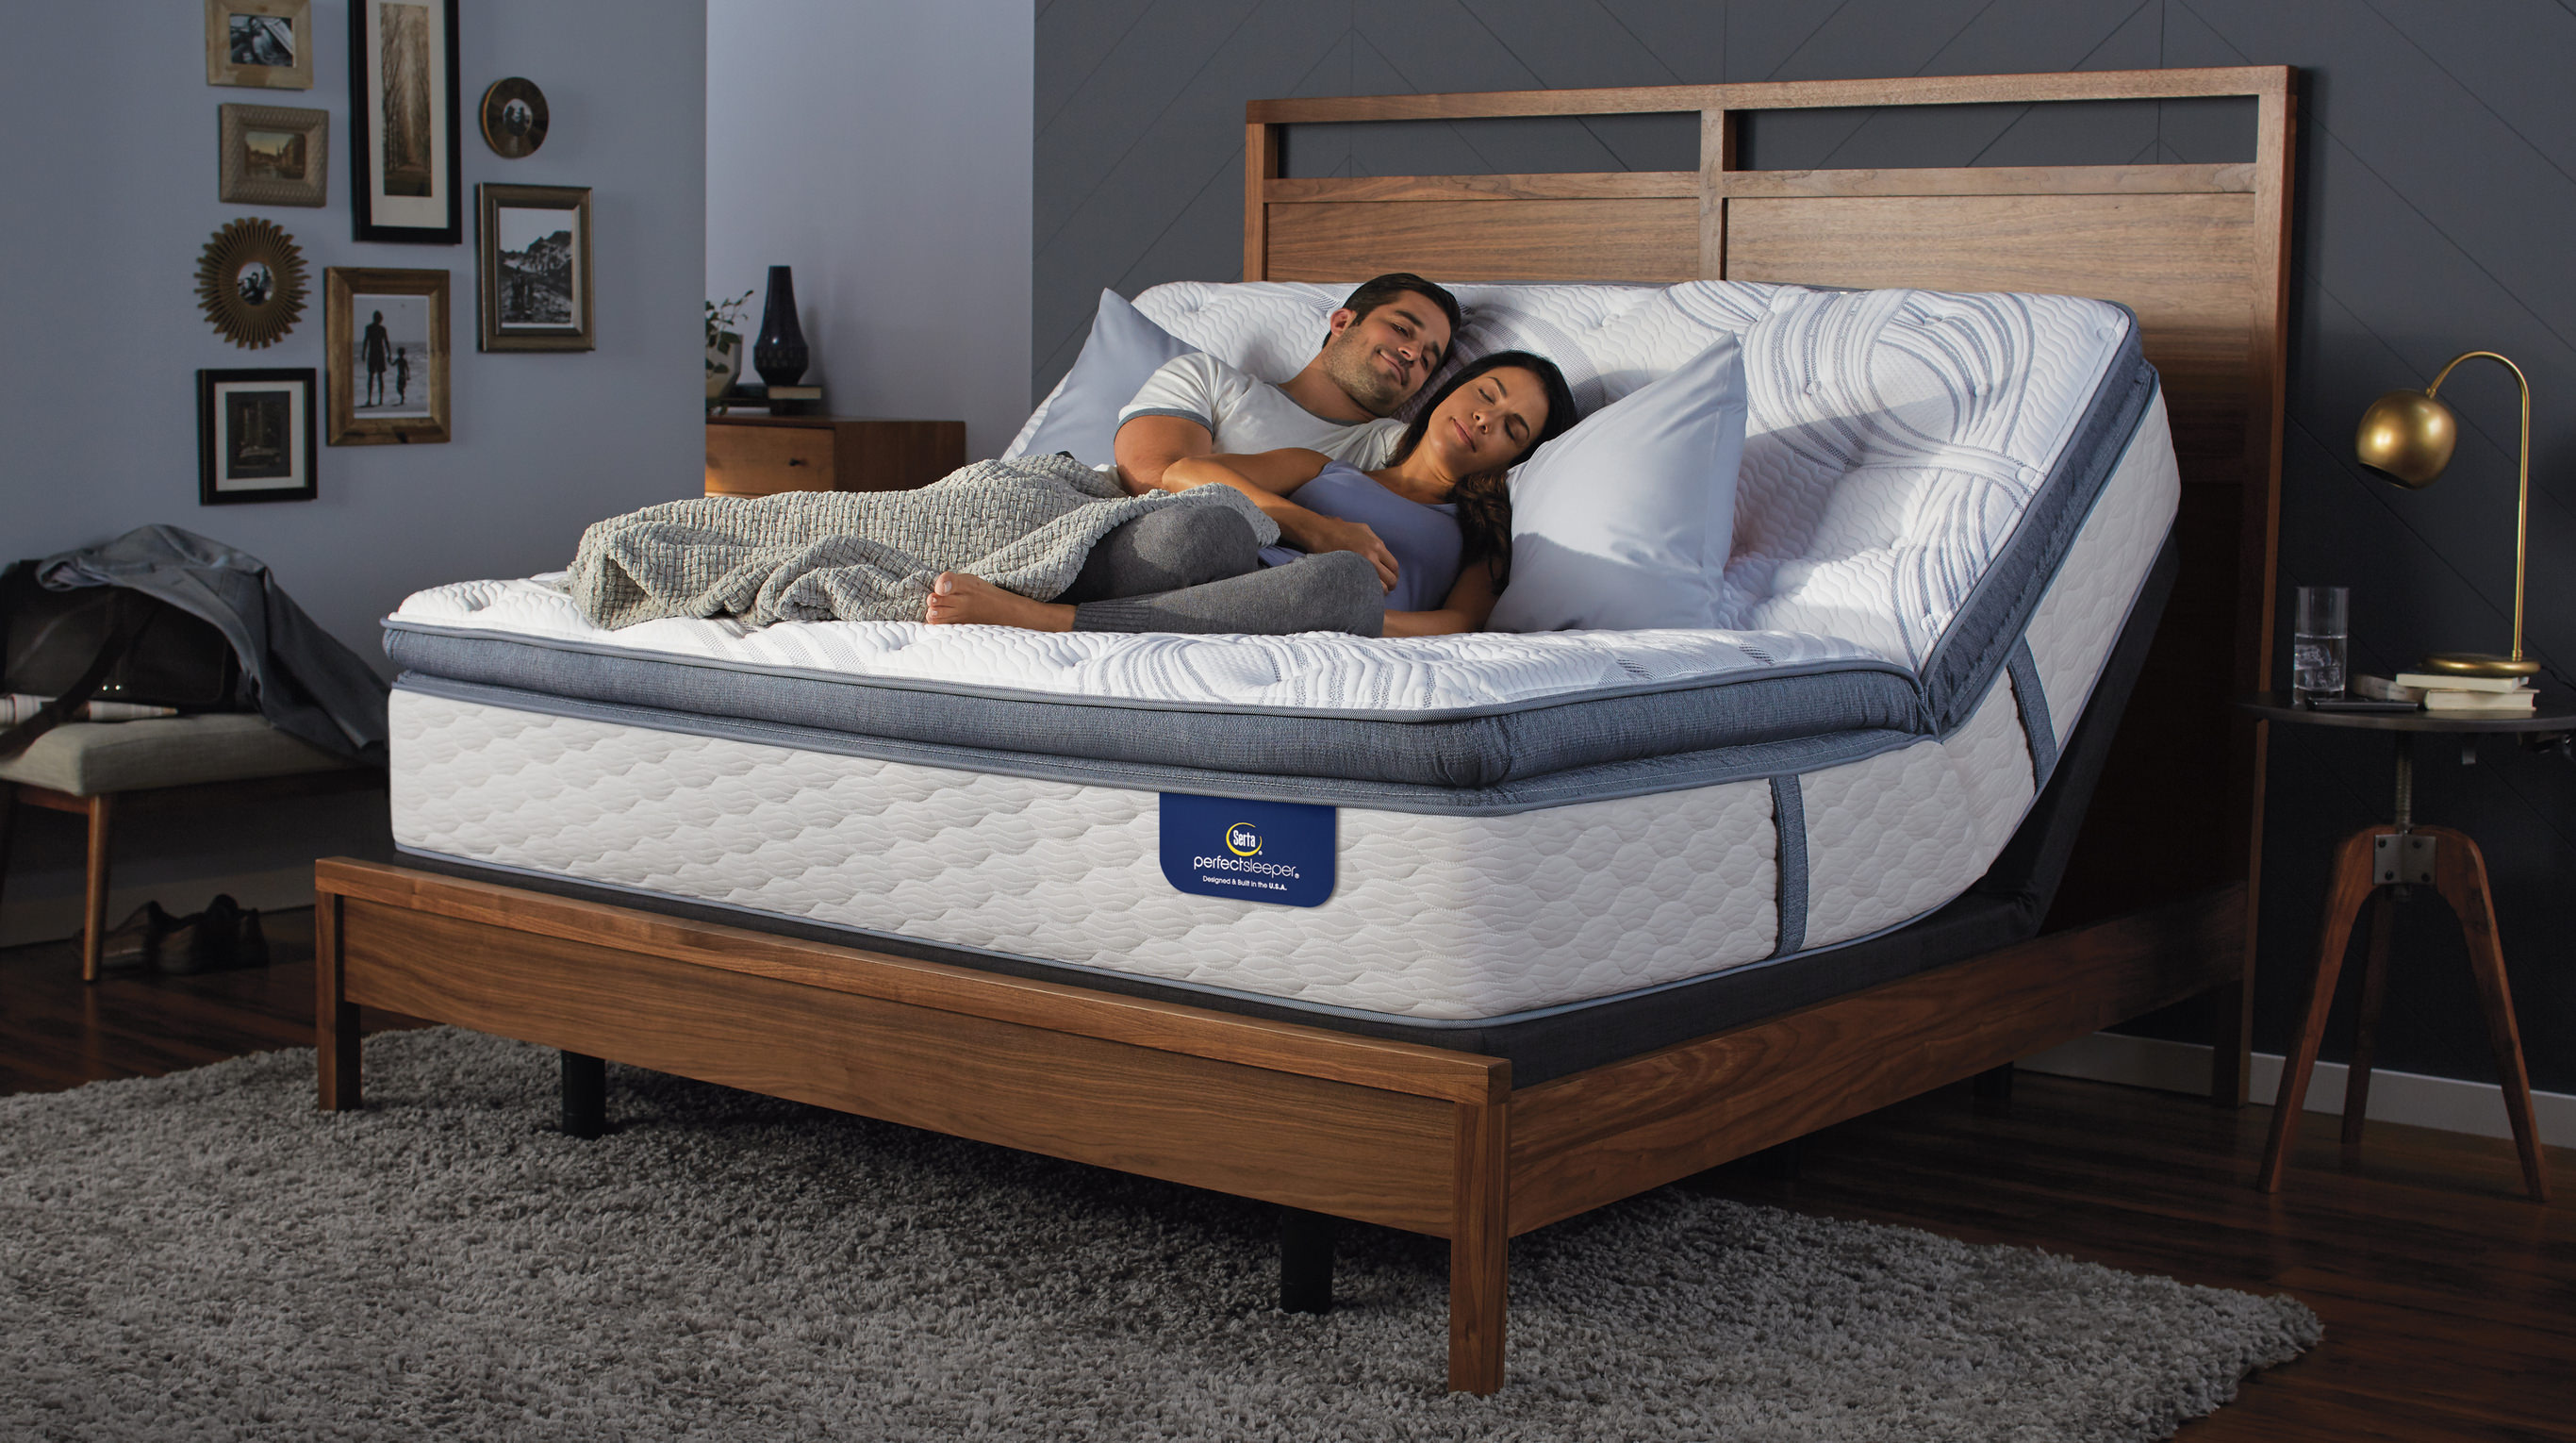 sleep mattress and furniture plus bedding